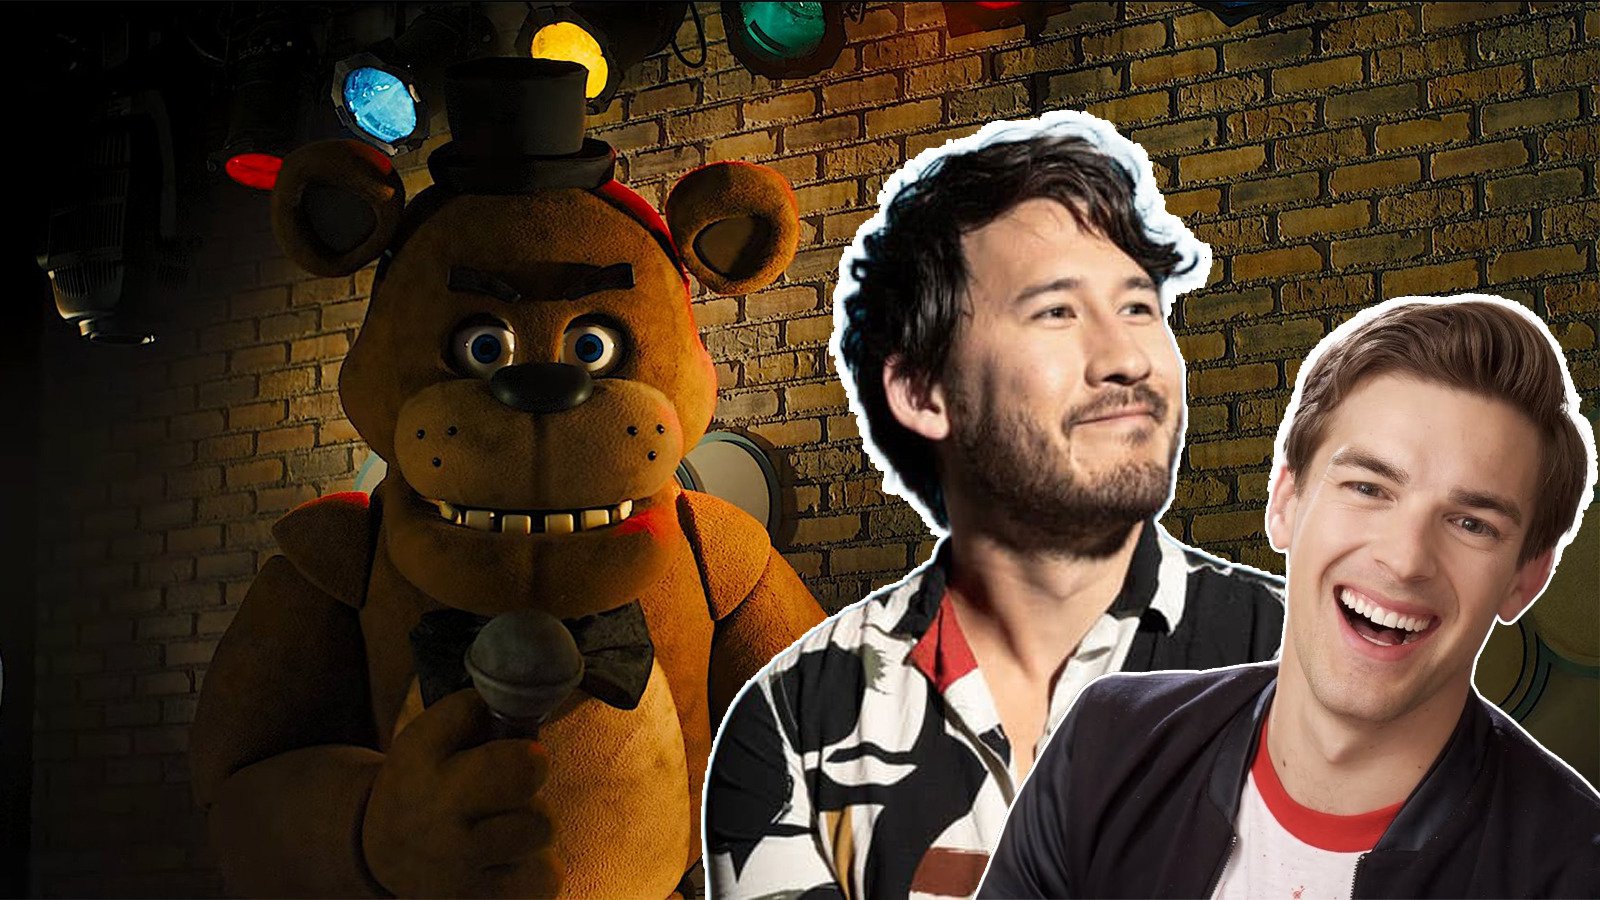 Five Nights at Freddy's: Entenda a complicada linha do tempo do